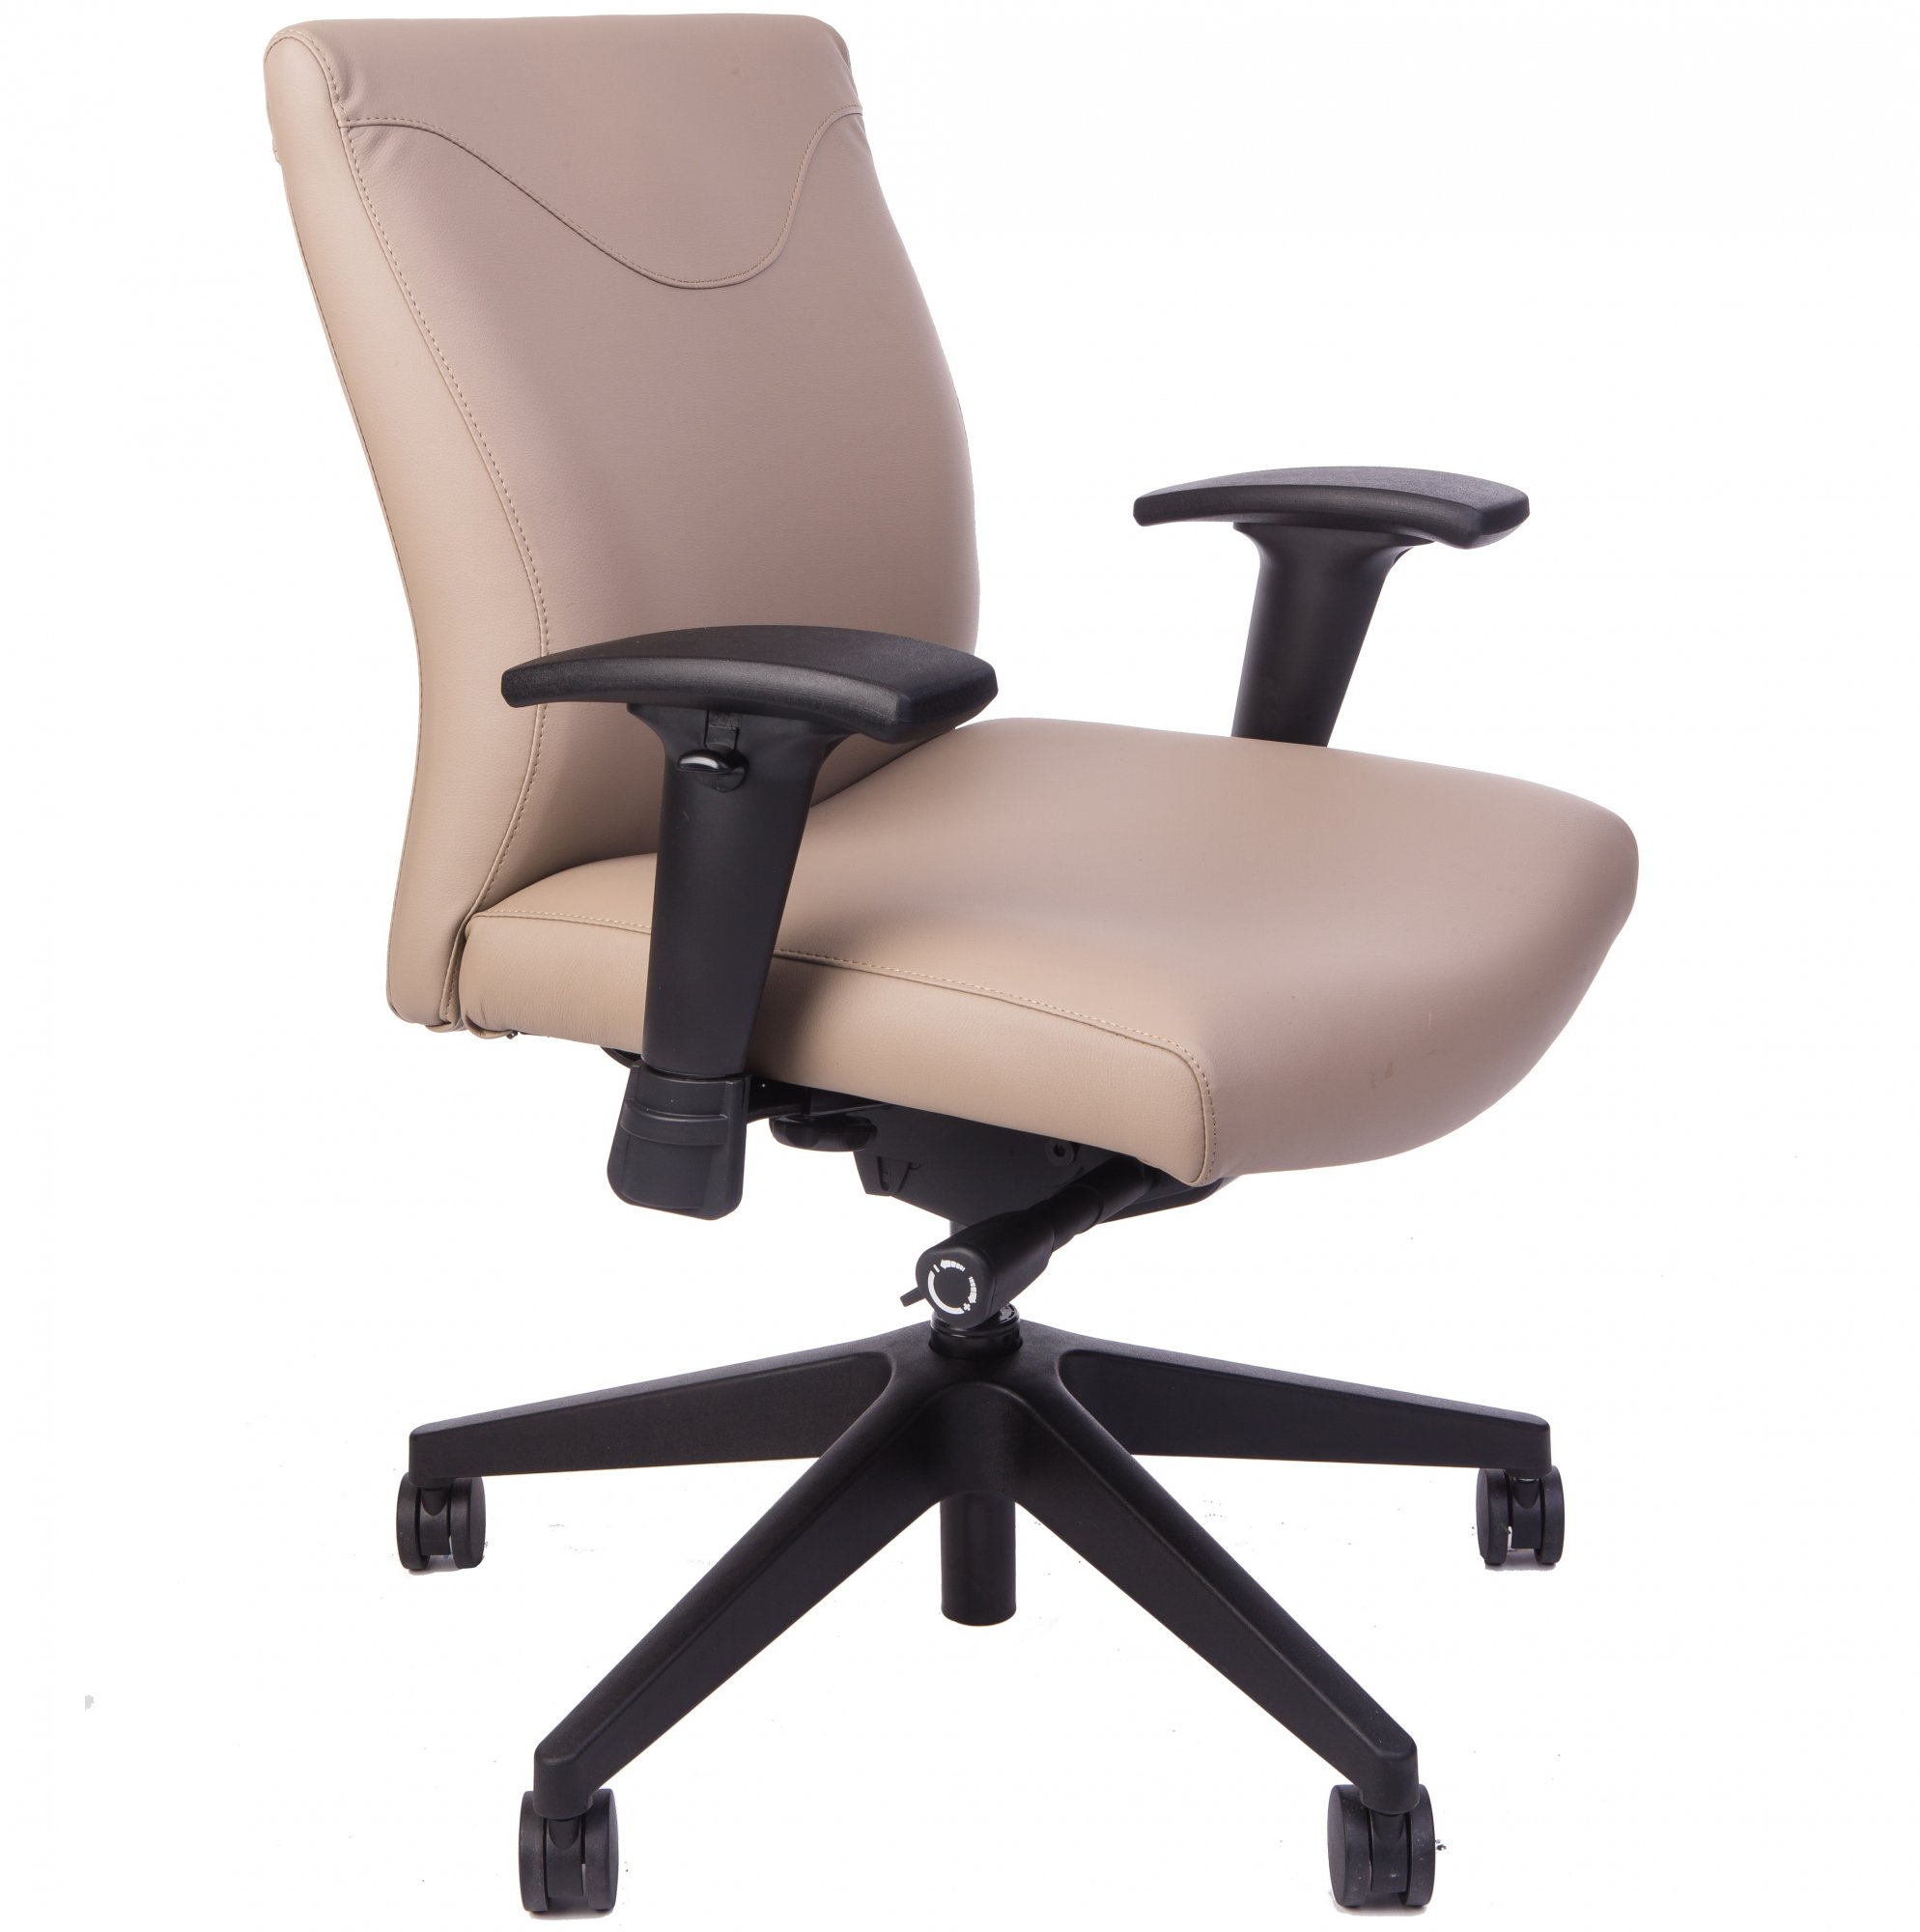 https://www.ergodirect.com/images/RFM_Seating/19420/alternative/RFM-Trademark-Managers-High-Back-Task-Chair_8.jpg